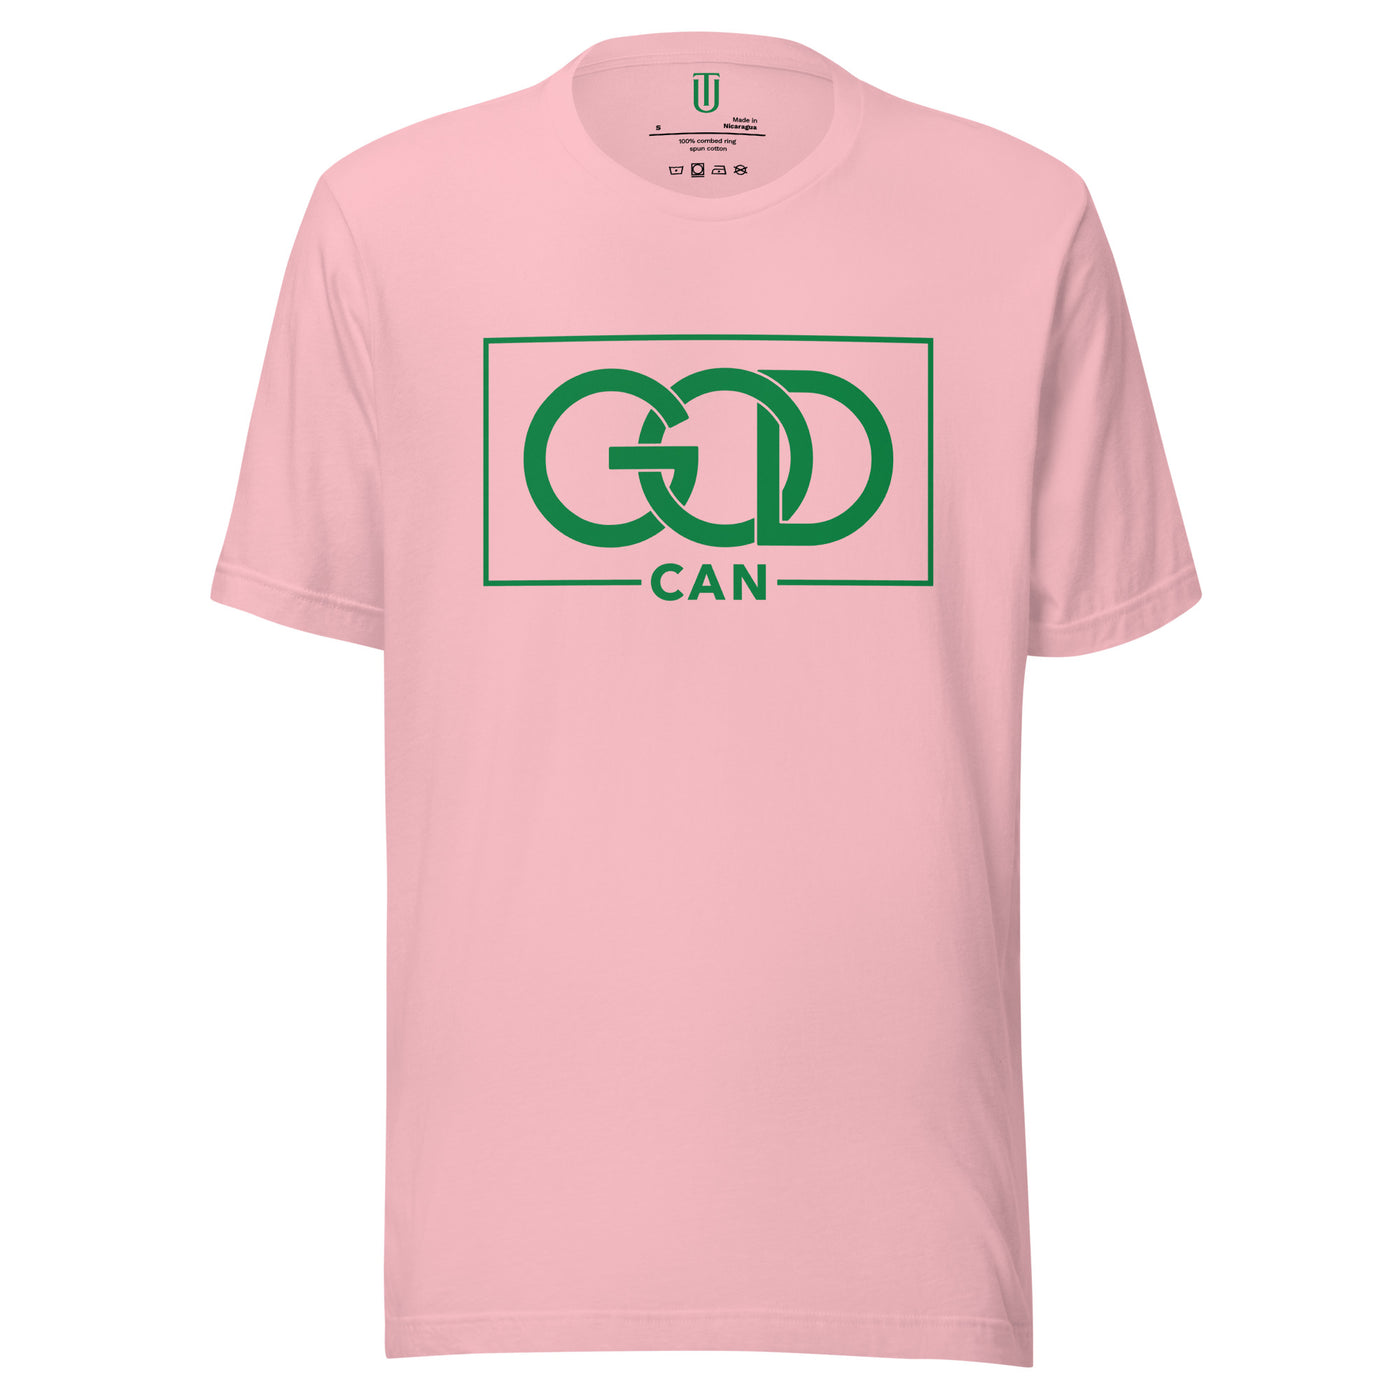 God Can Pink cotton unisex T-shirt. "GOD CAN" Green design on pink t-shirt.